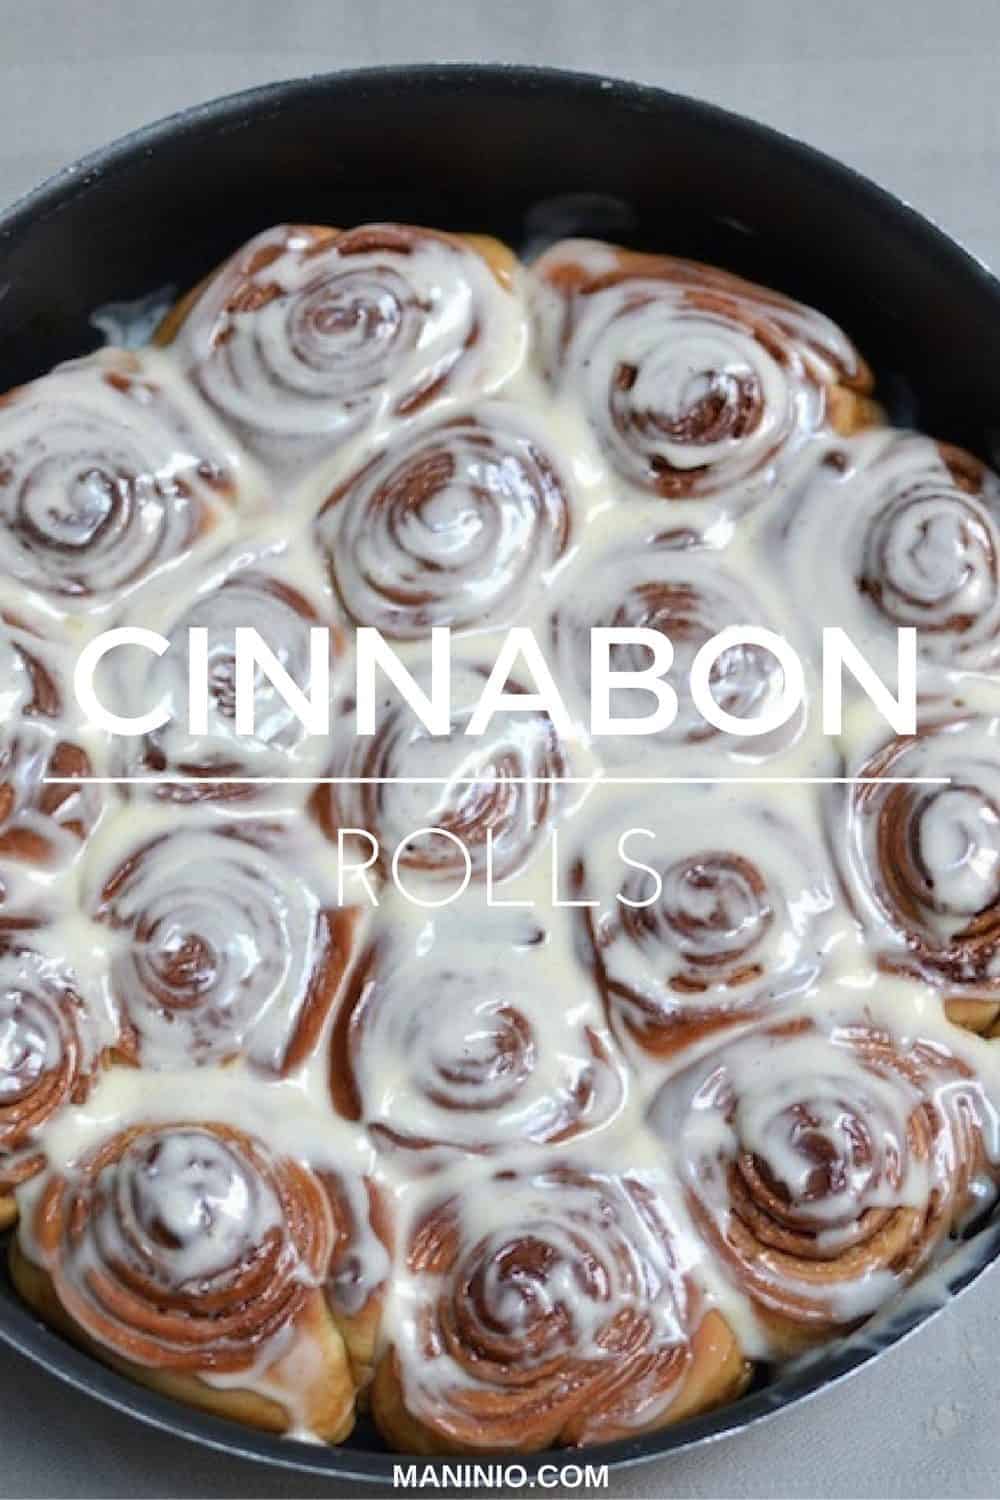 cinnabon - rolls - vegetarian treats - maninio.com #cinnabonrolls #cinnamontreats